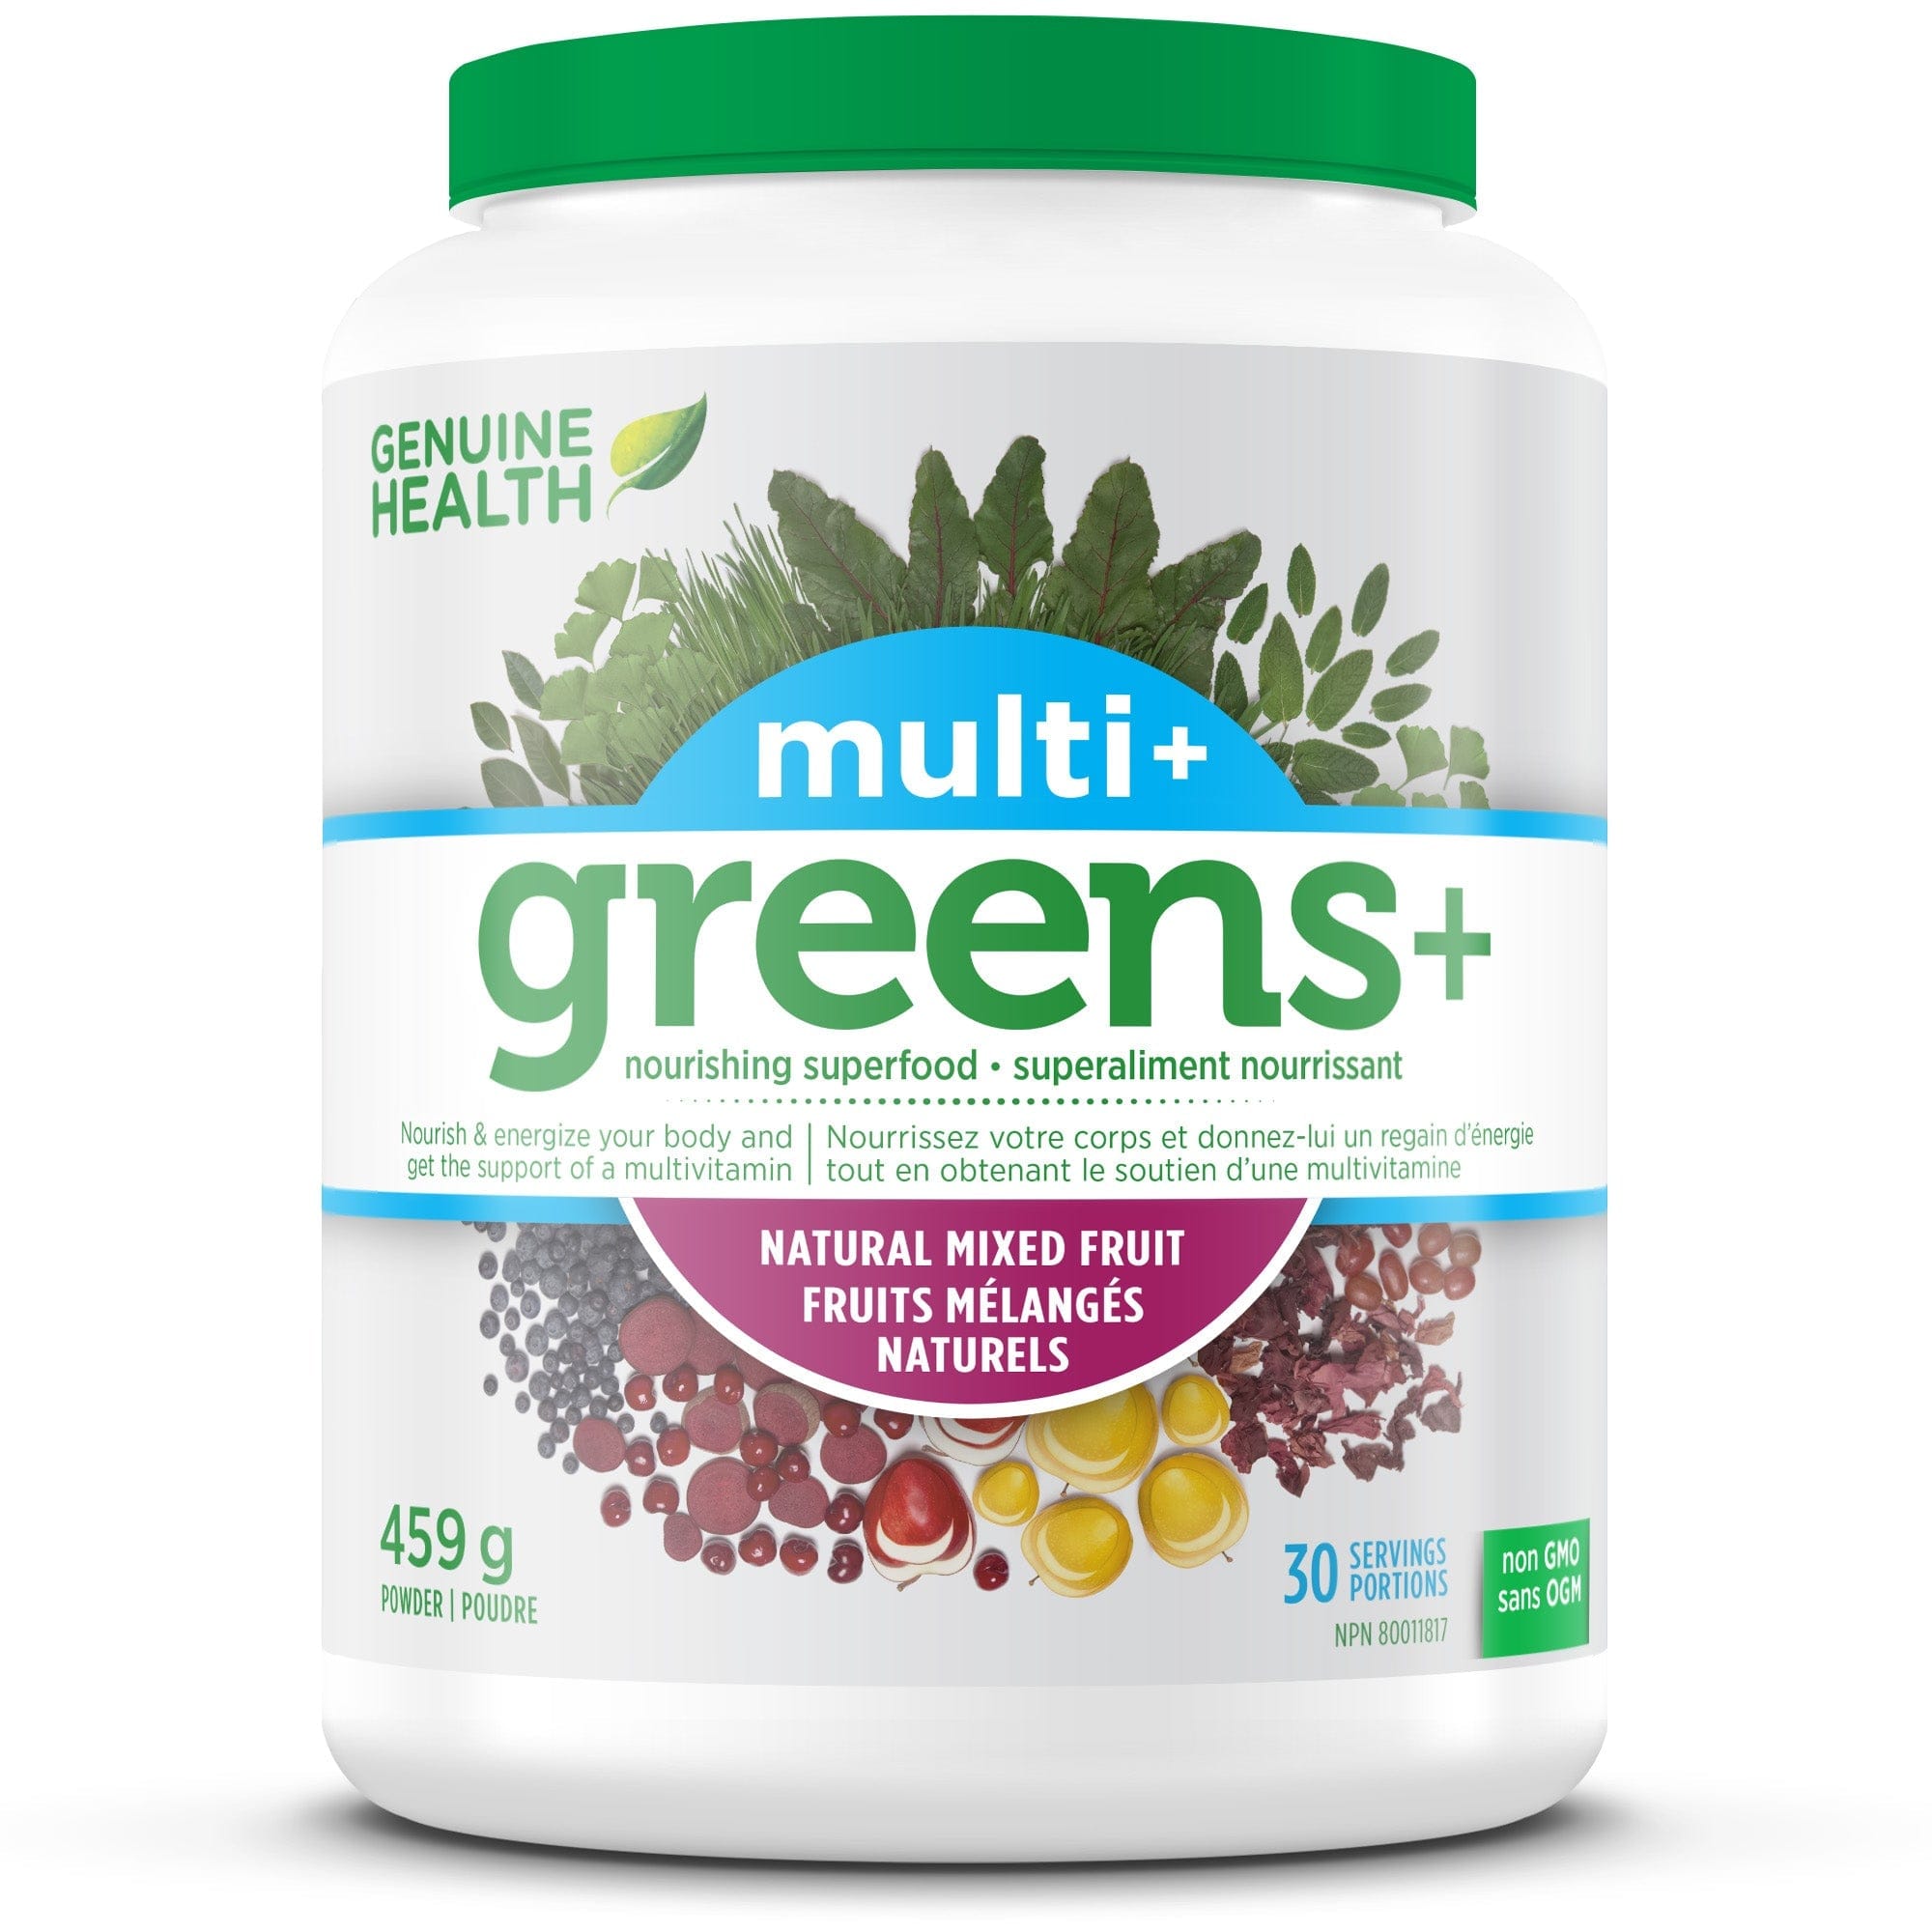 GENUINE HEALTH Suppléments Greens+ multi (fruits mélangés) 459g